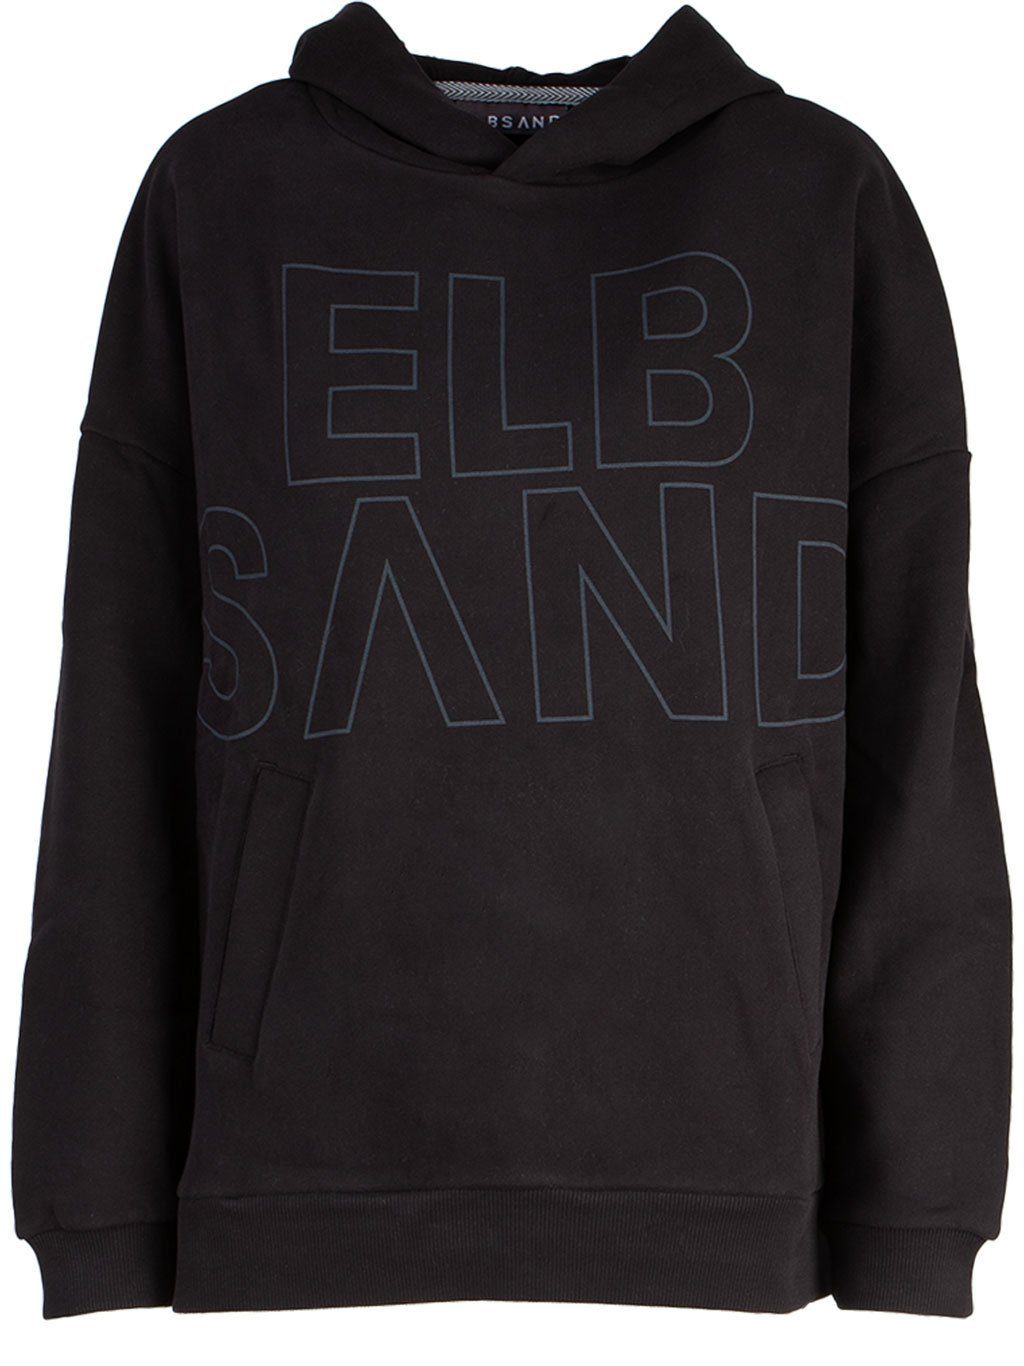 Elbsand Sweater